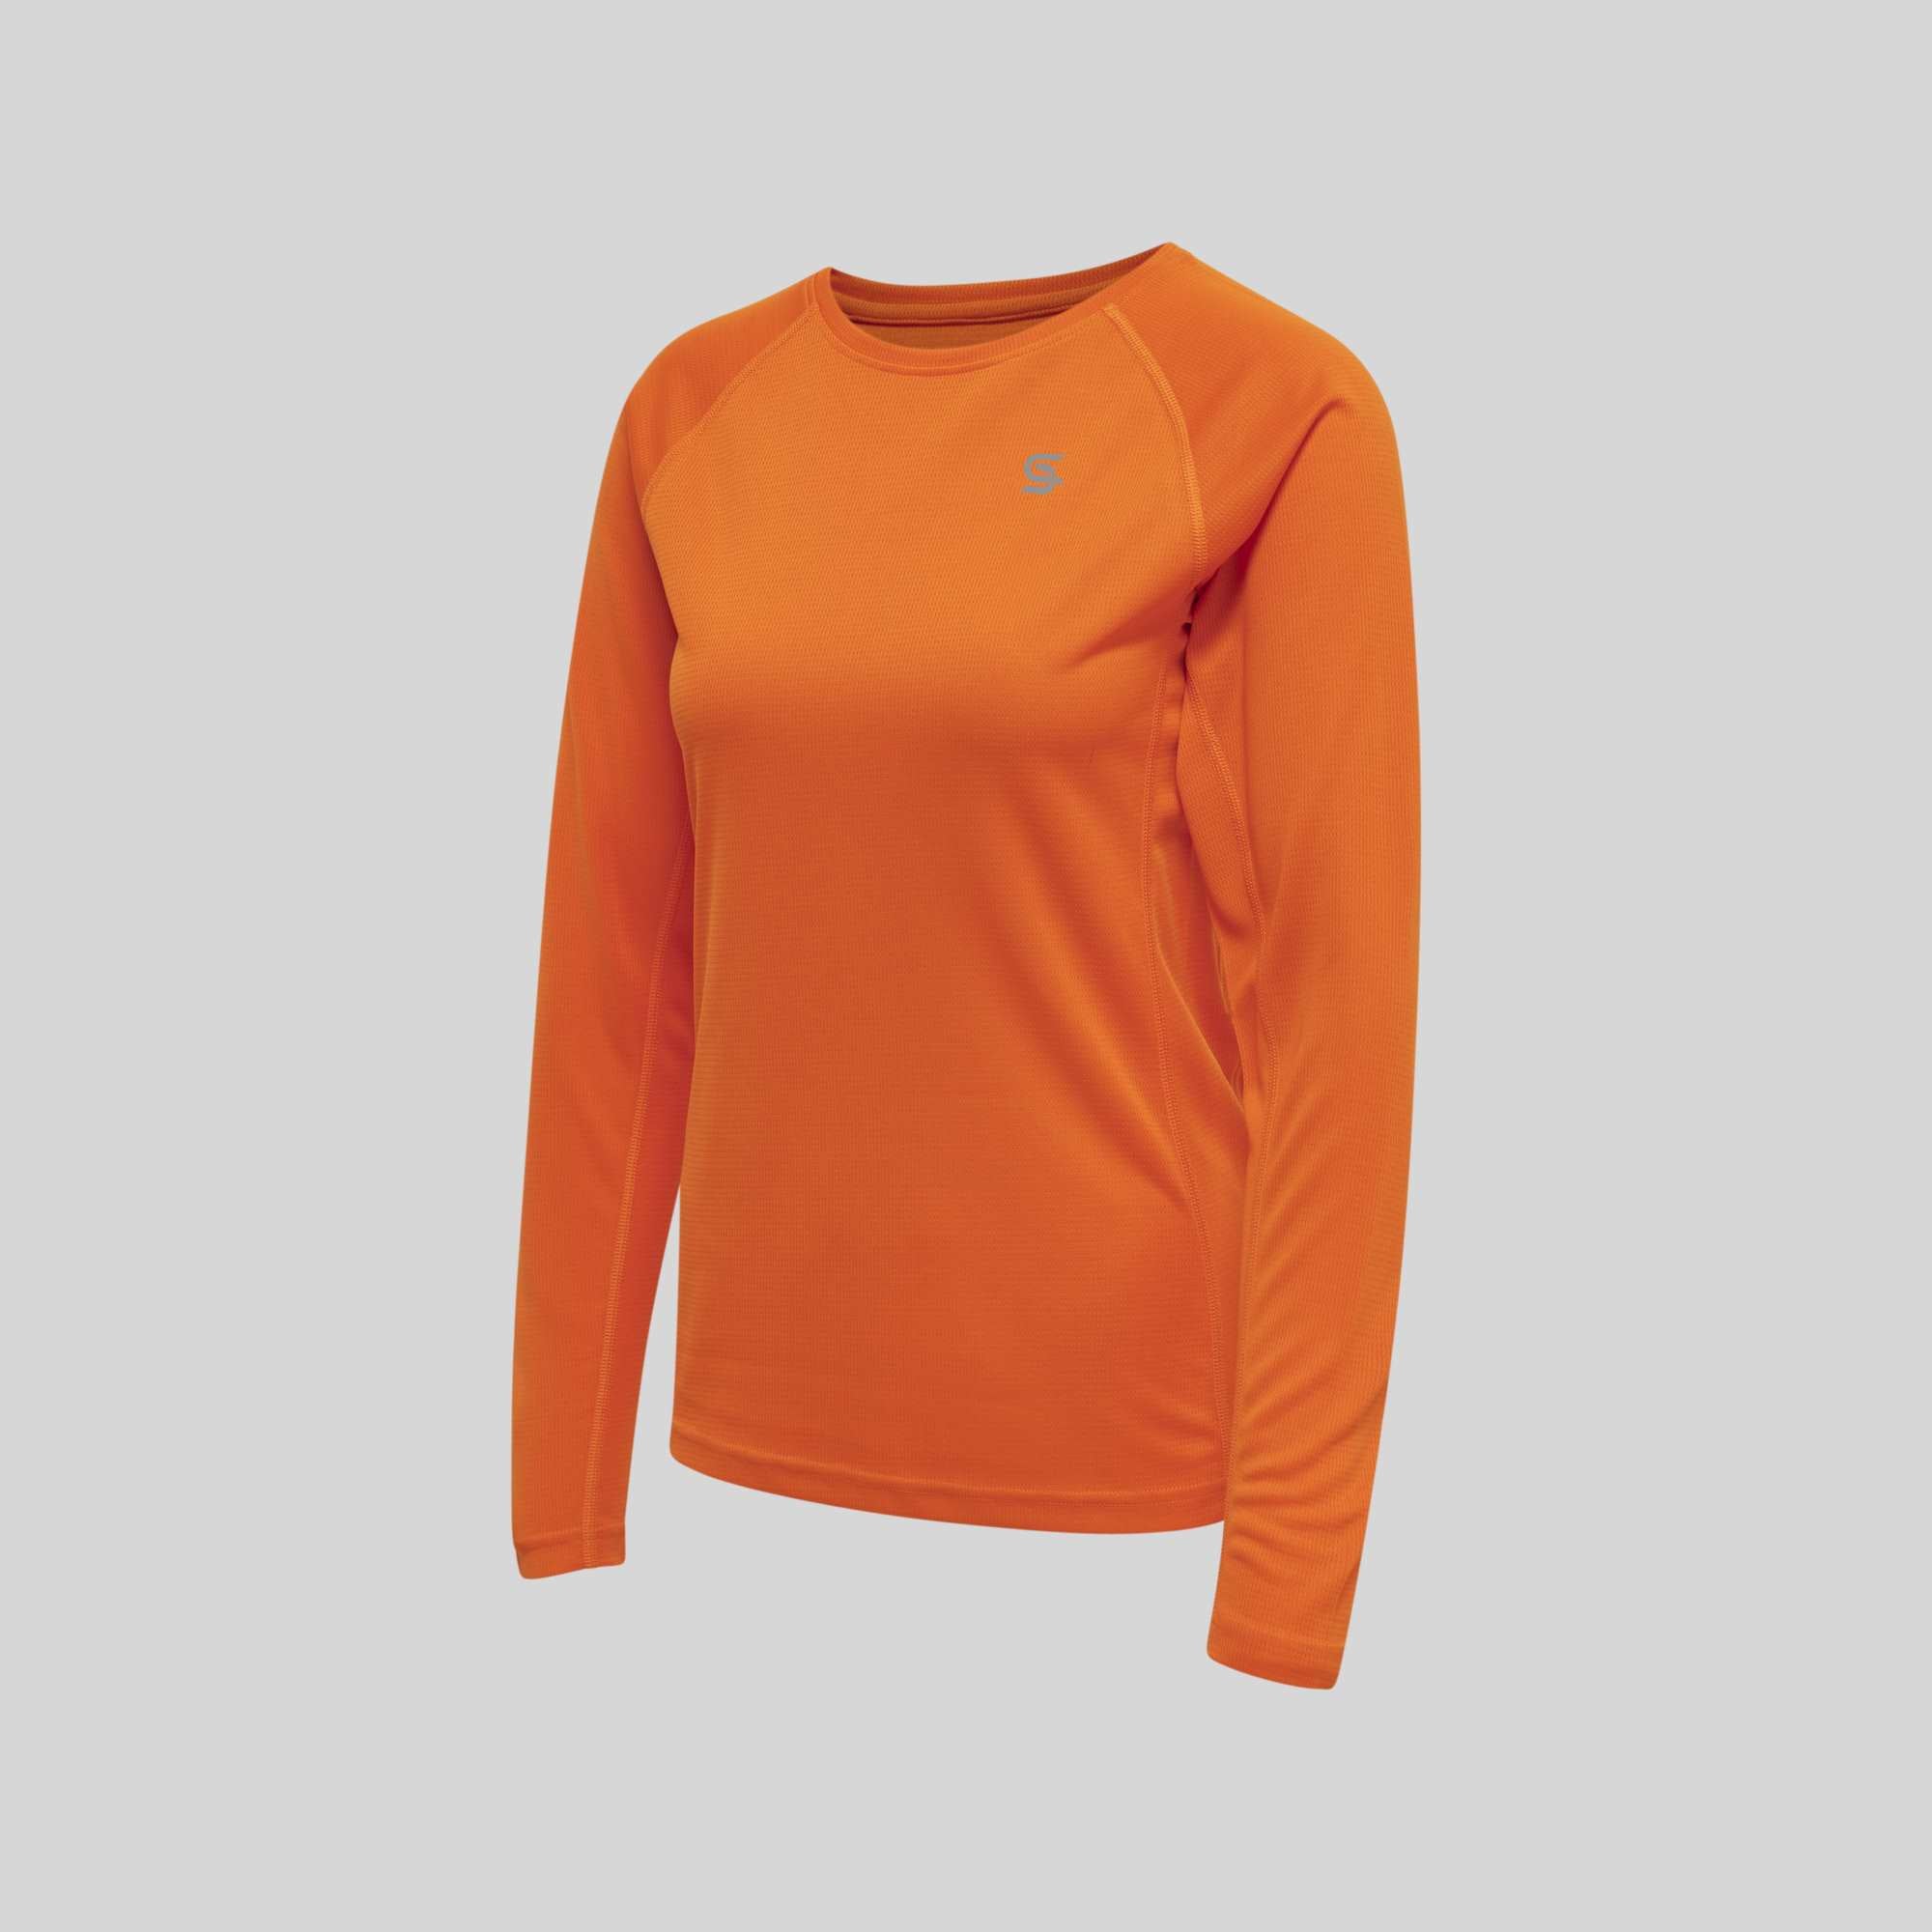 Power Running Tshirt Orange Women's - Sports Cartel